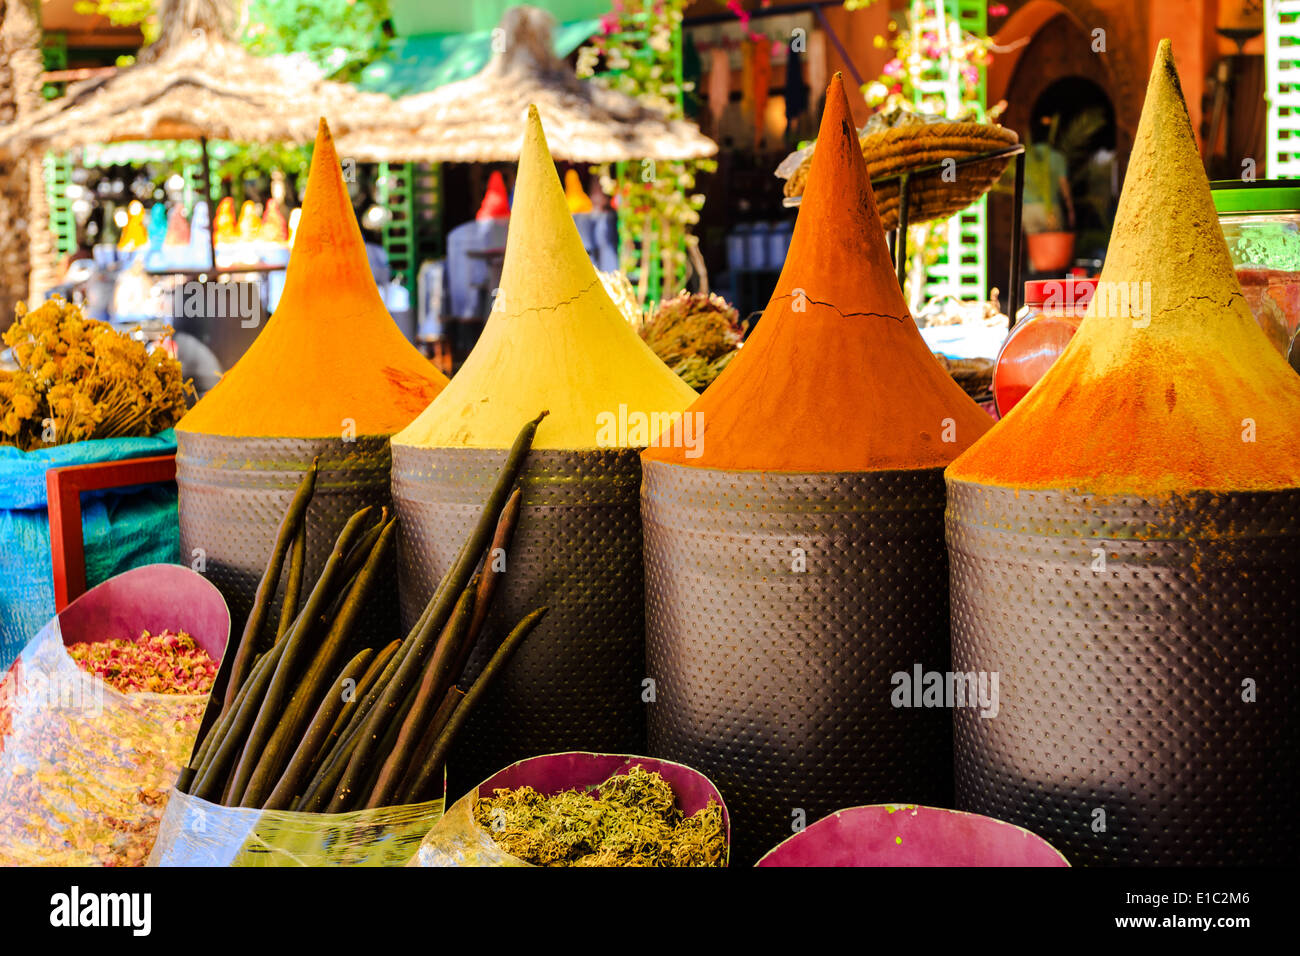 Moroccan spice stall in marrakech market, morocco Stock Photo